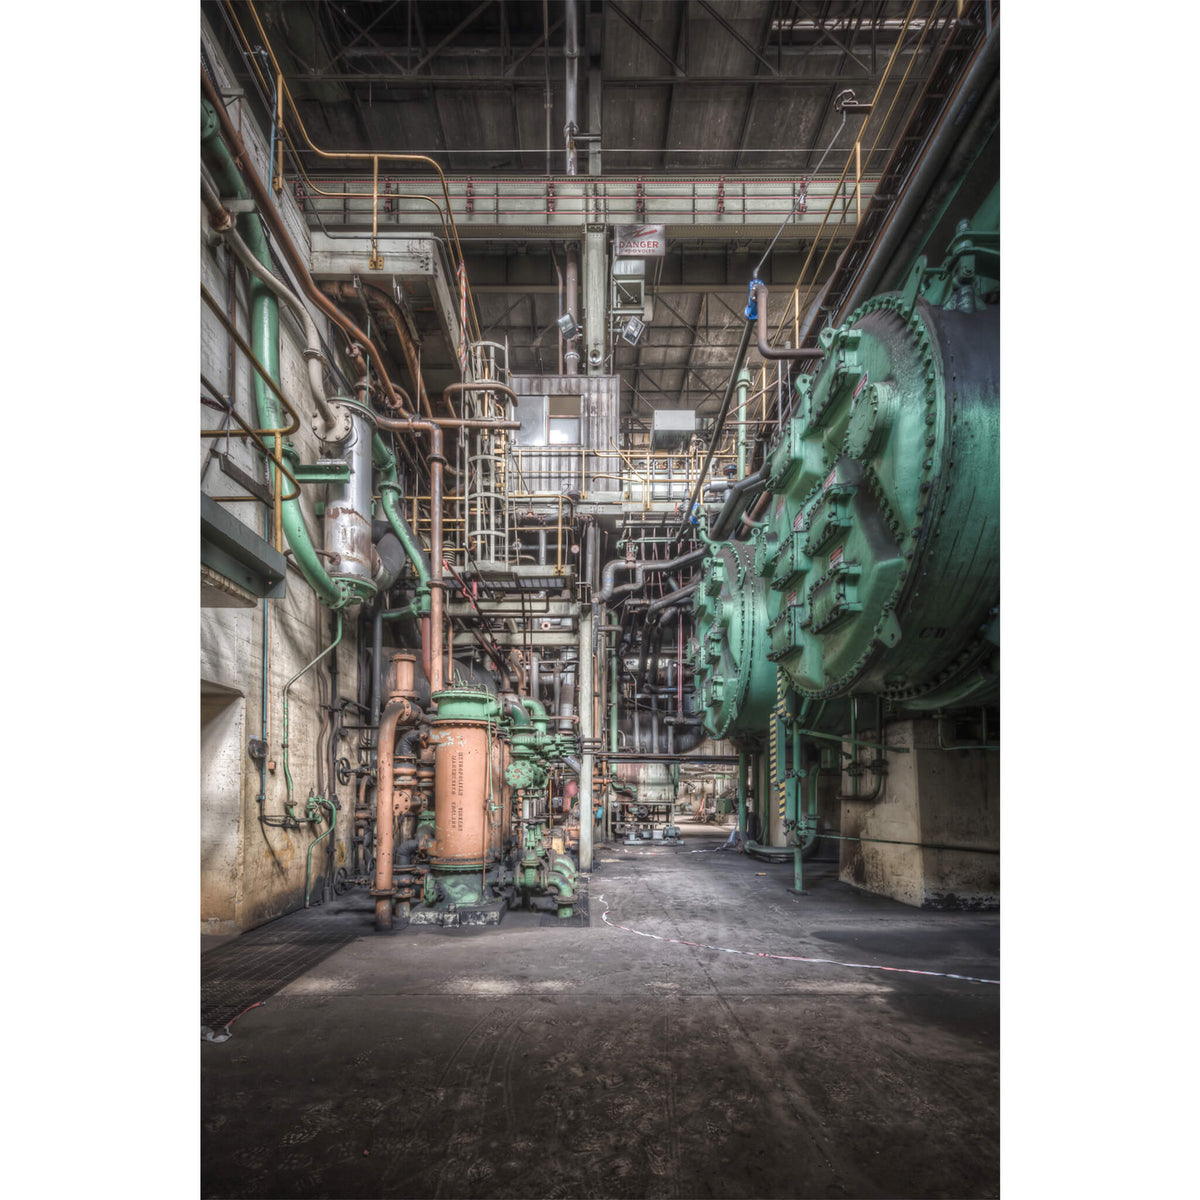 Condenser | Morwell Power Station